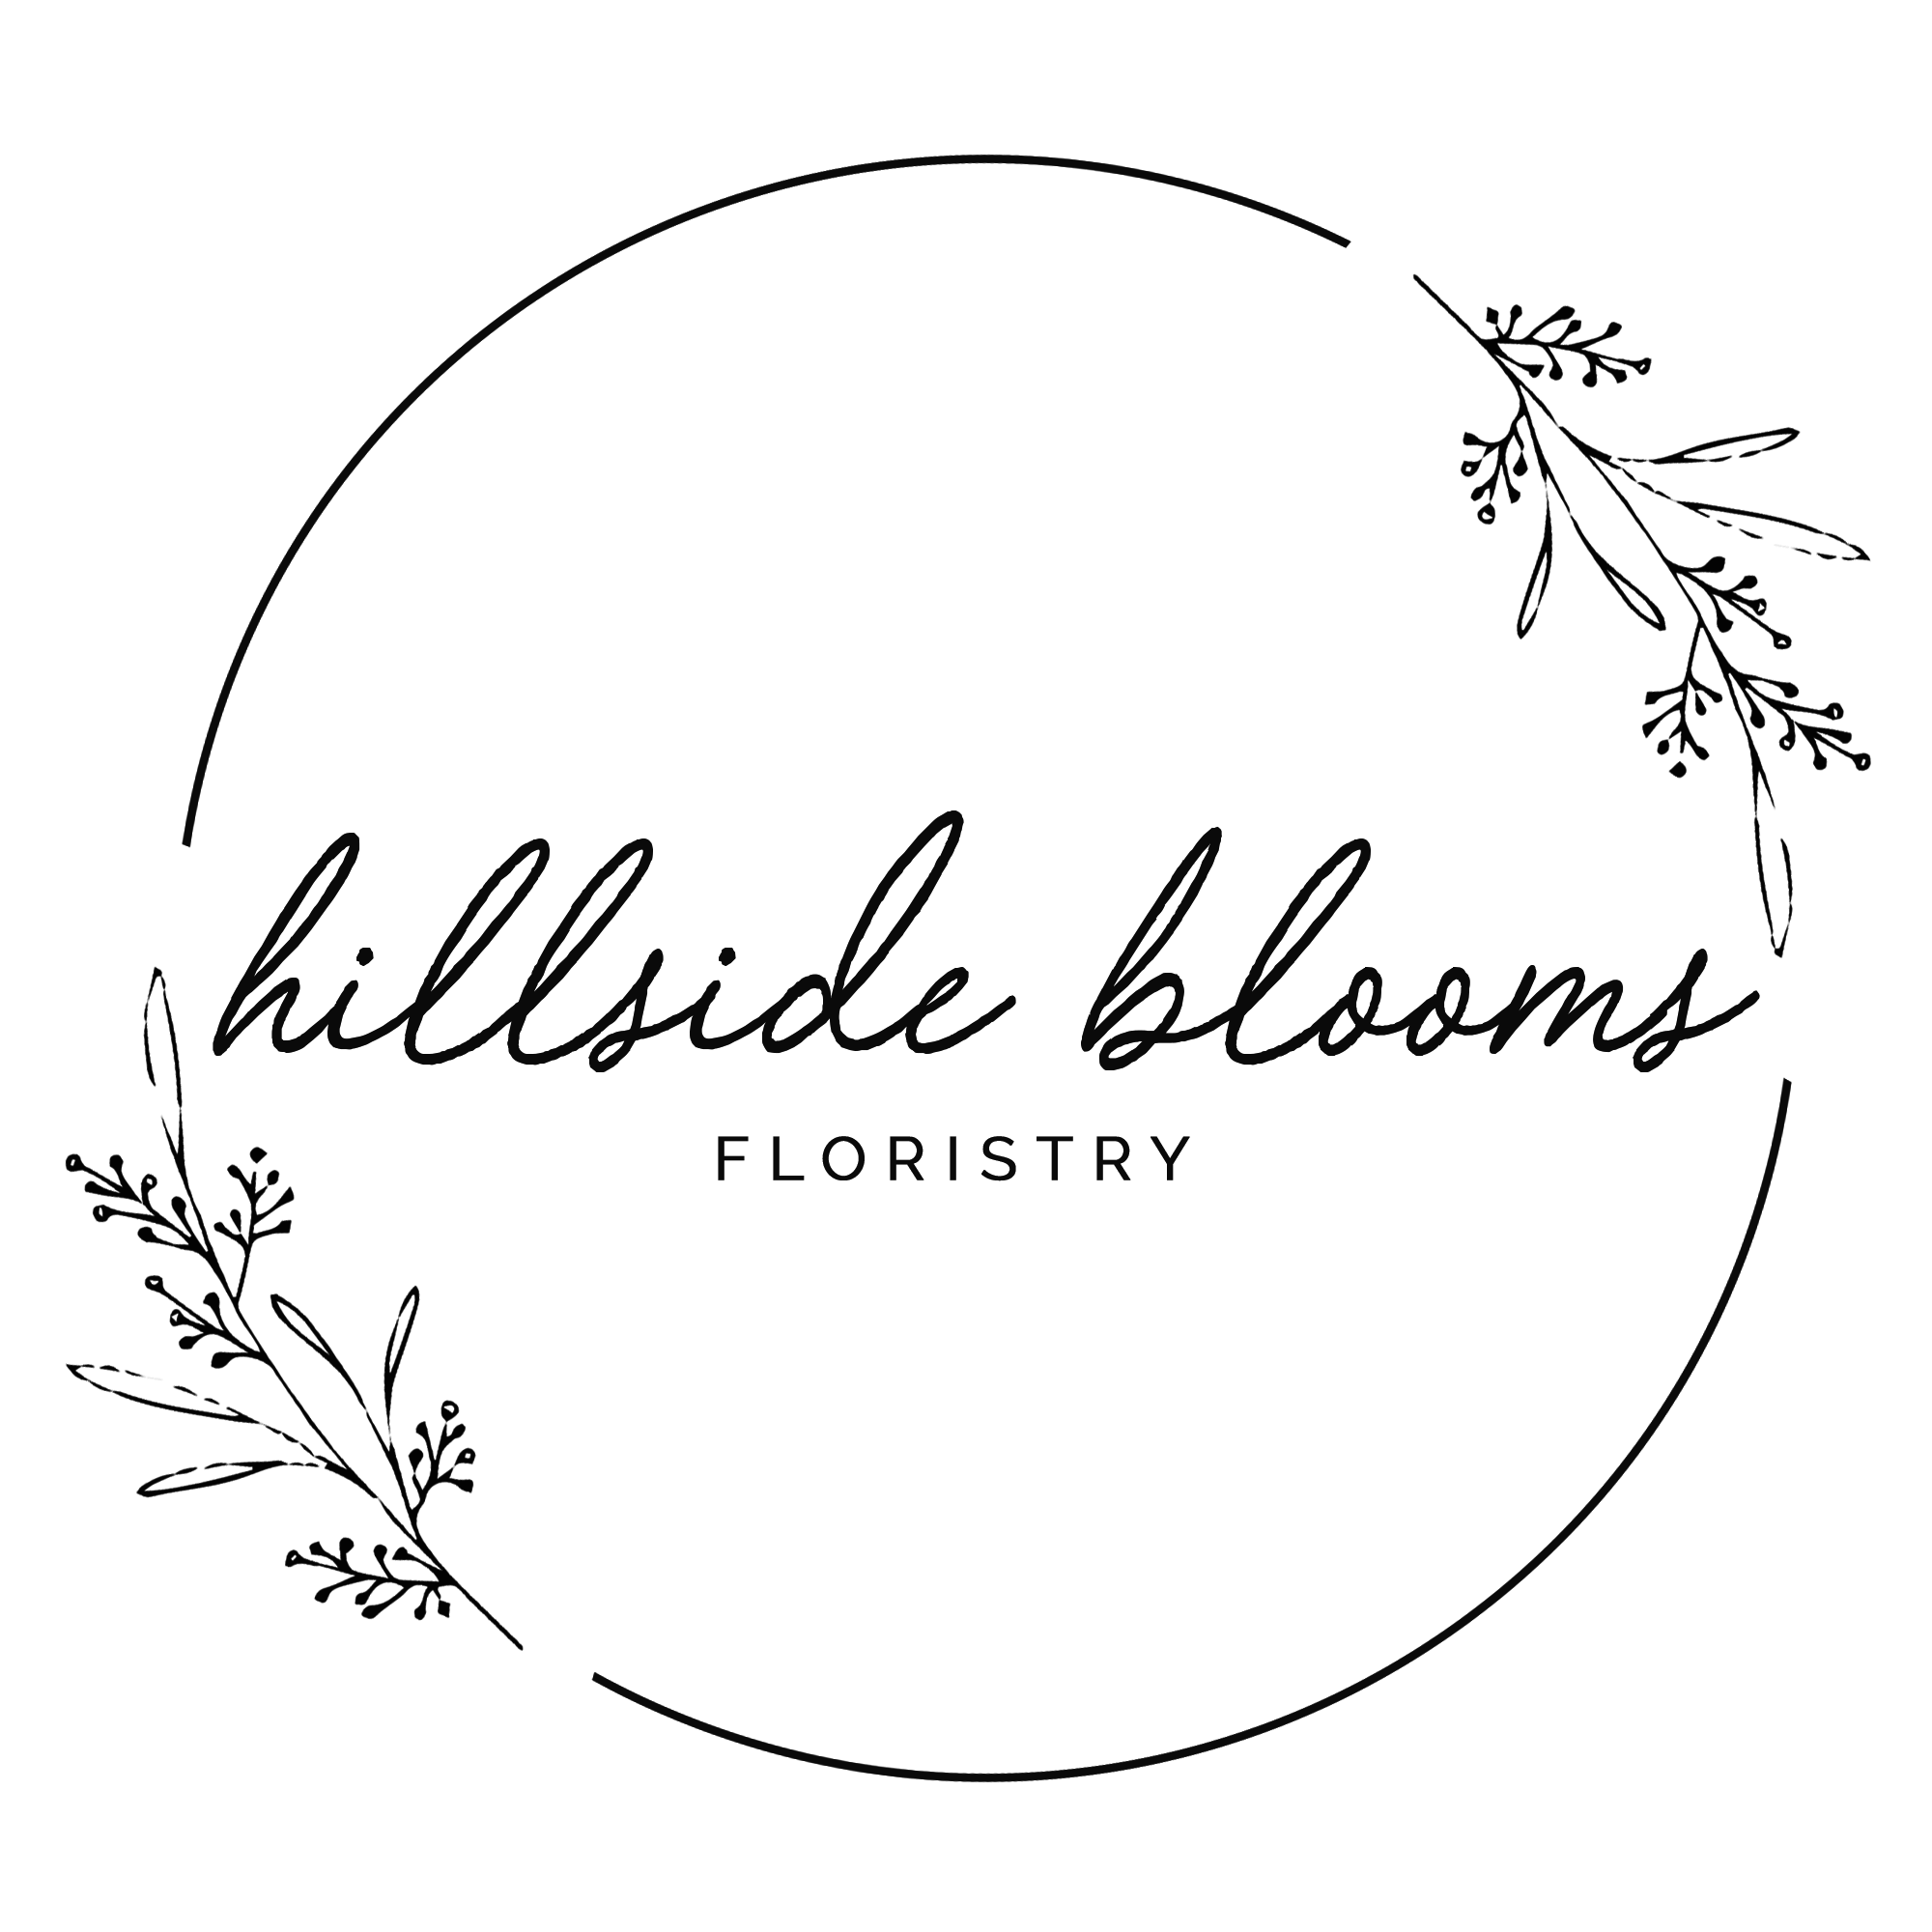 Hillside Blooms Floristry